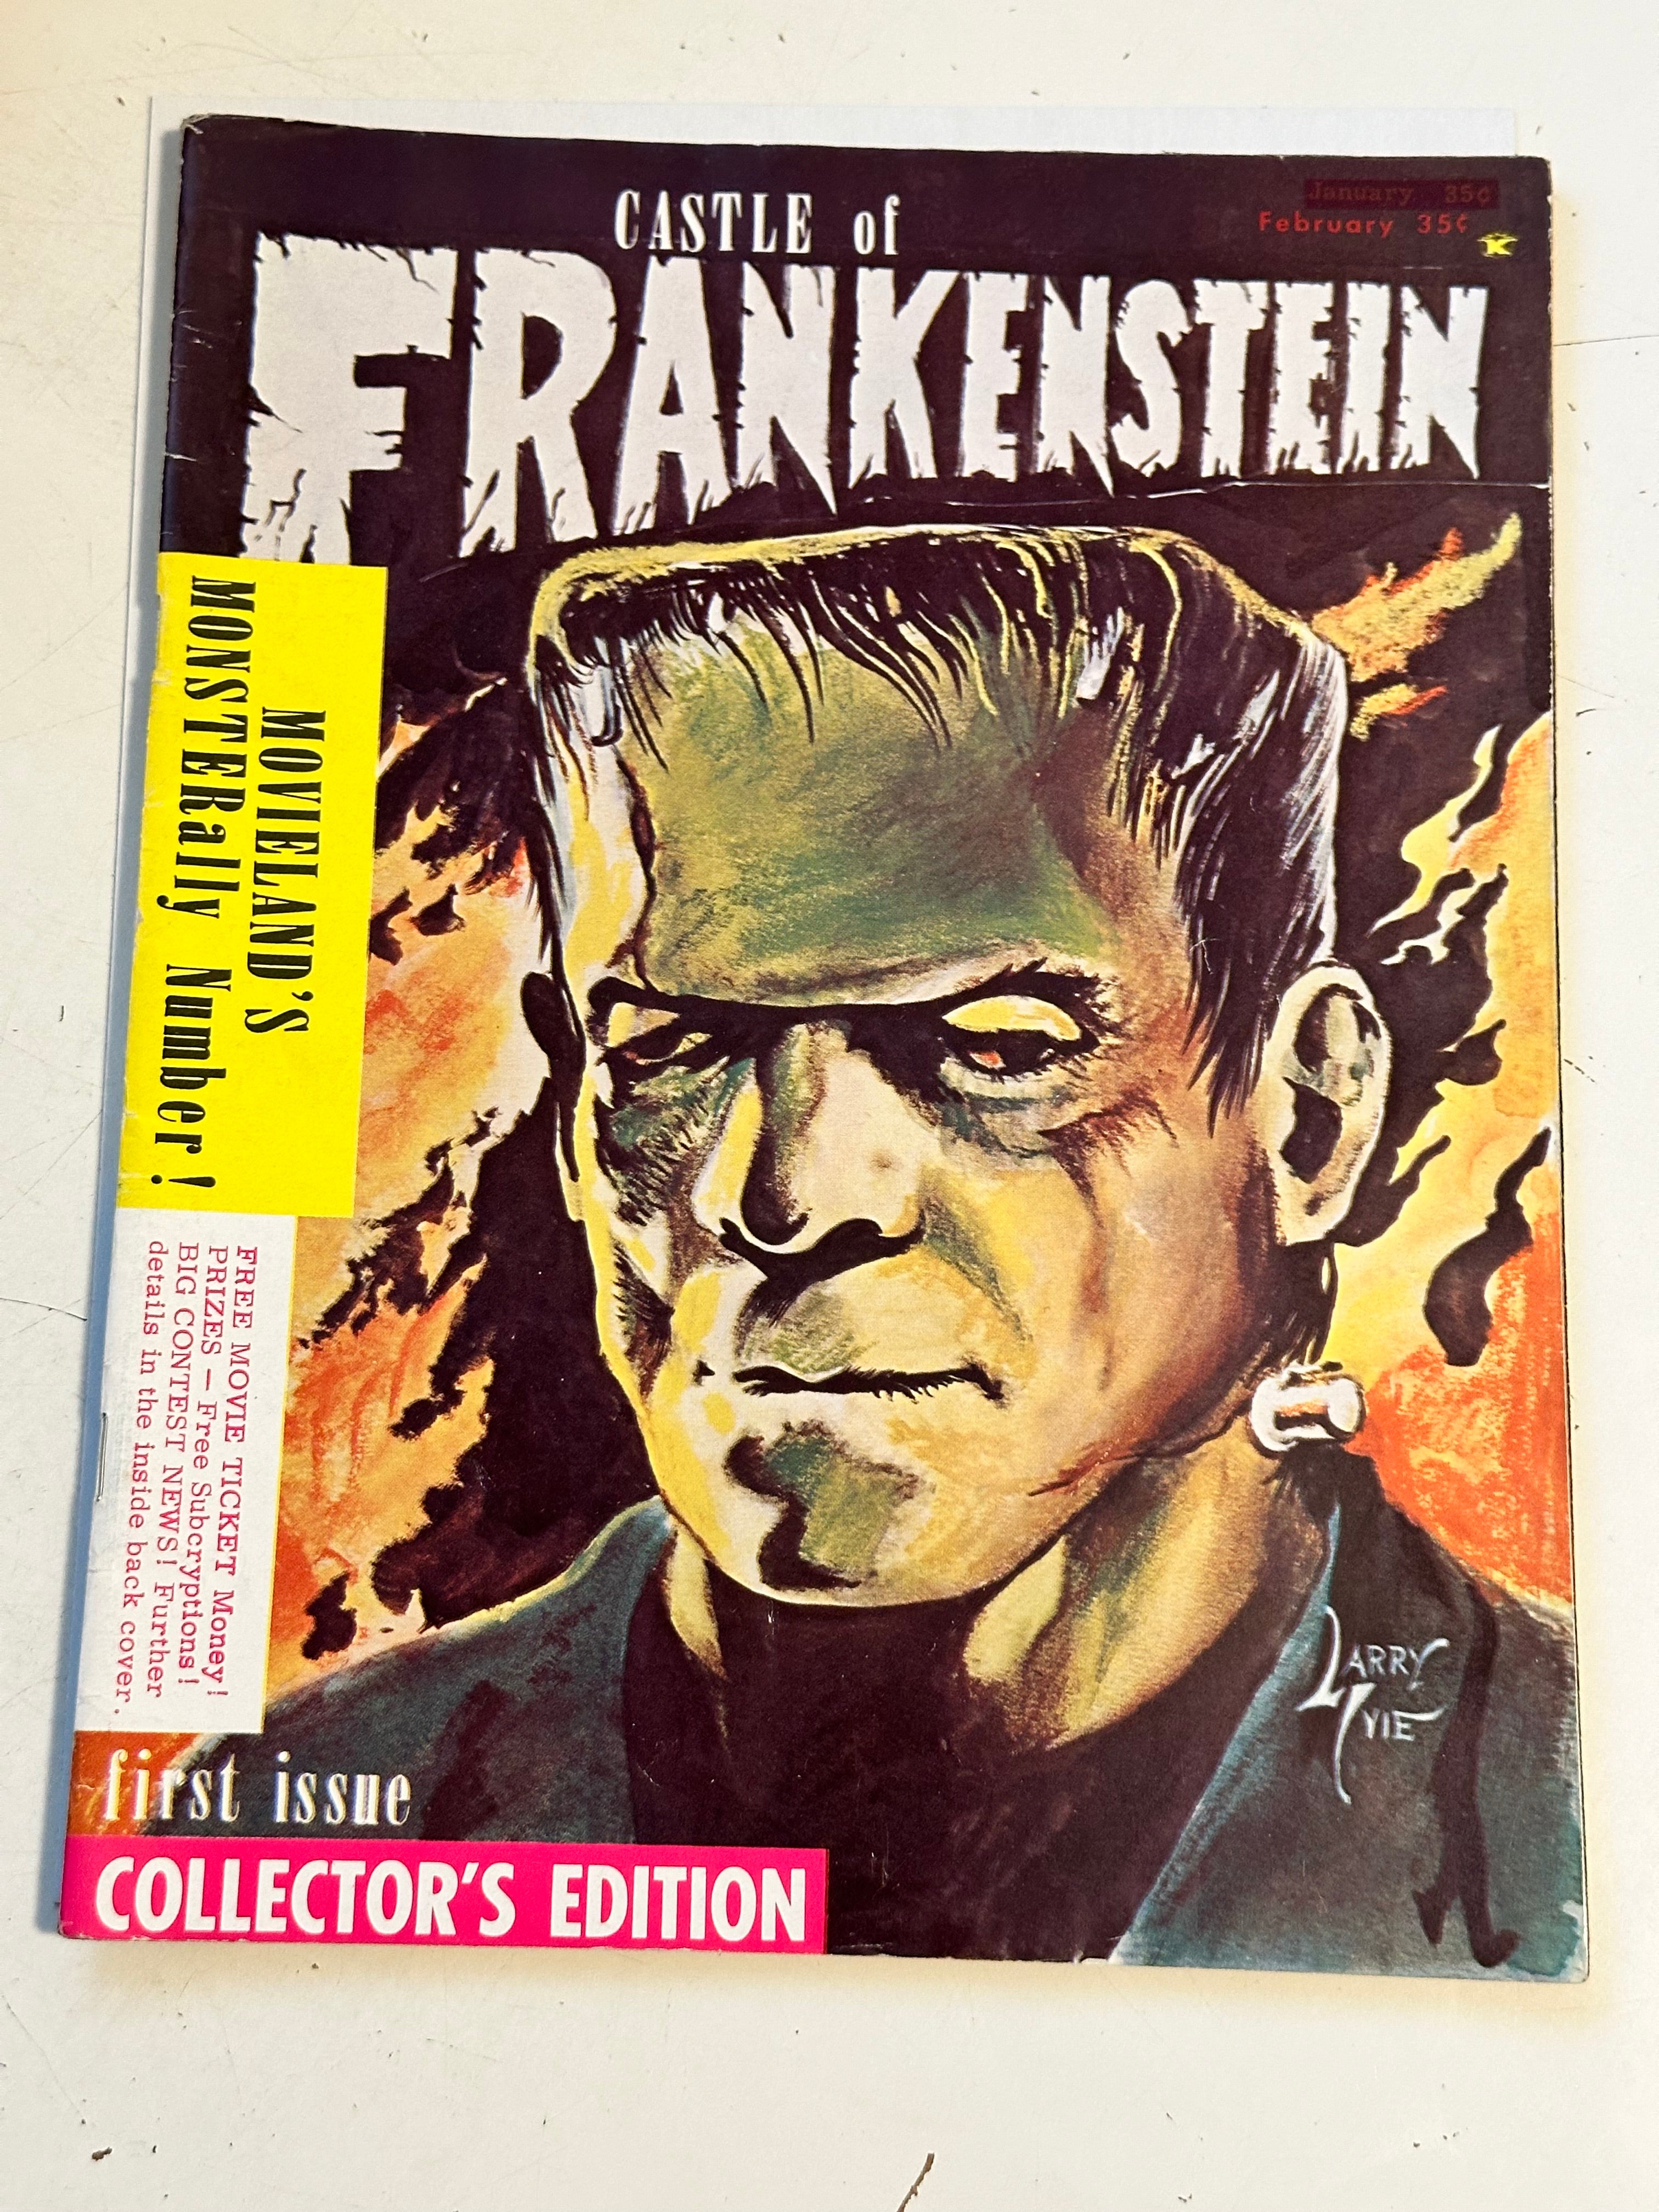 Castle of Frankenstein #1 rare high grade condition movie/TV magazine 1961